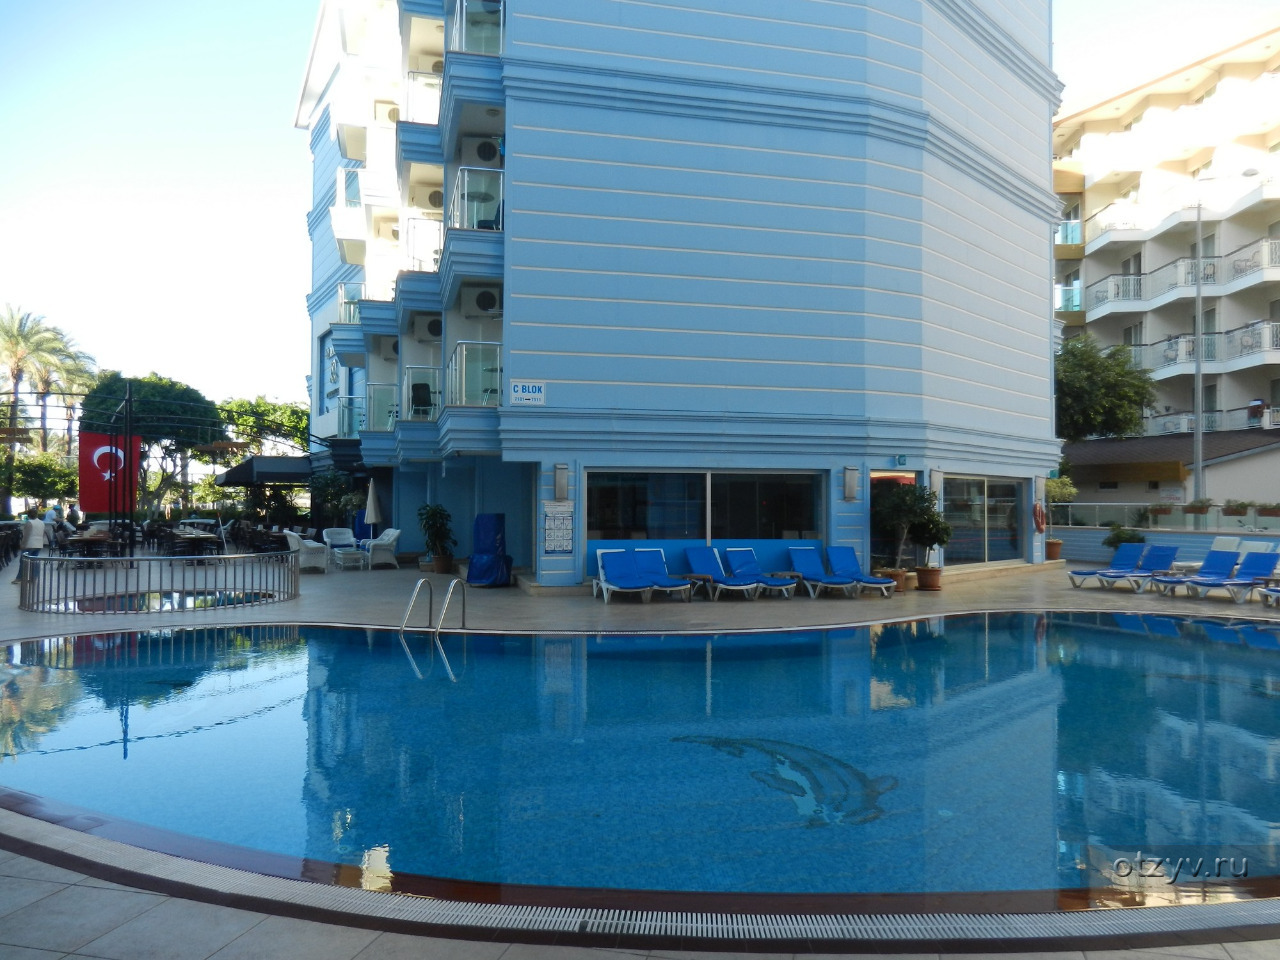 Sultan sipahi resort hotel. Sultan Sipahi Resort 4 ** пляж.